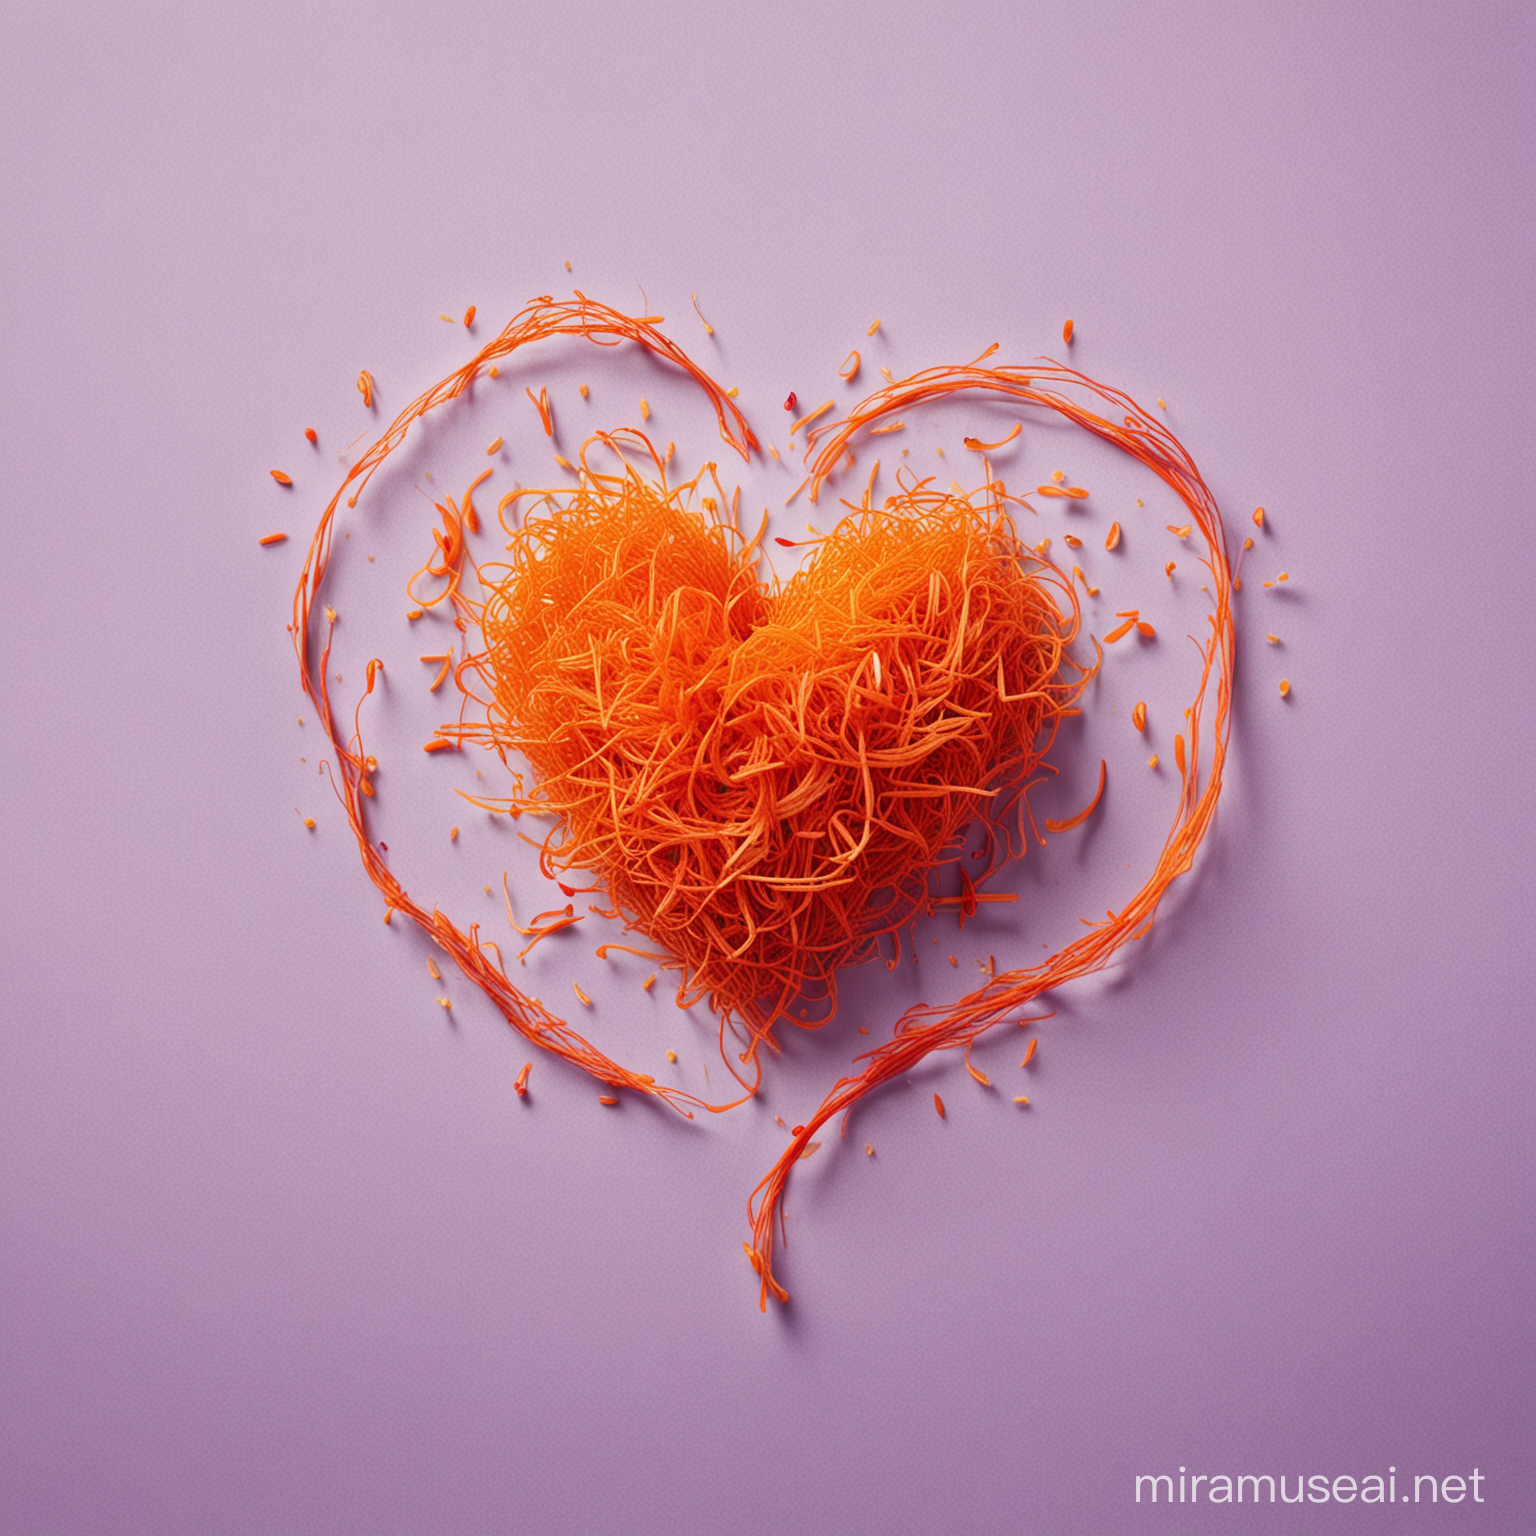 Saffron Health Benefits Icons of Mood Heart Brain Immune Support